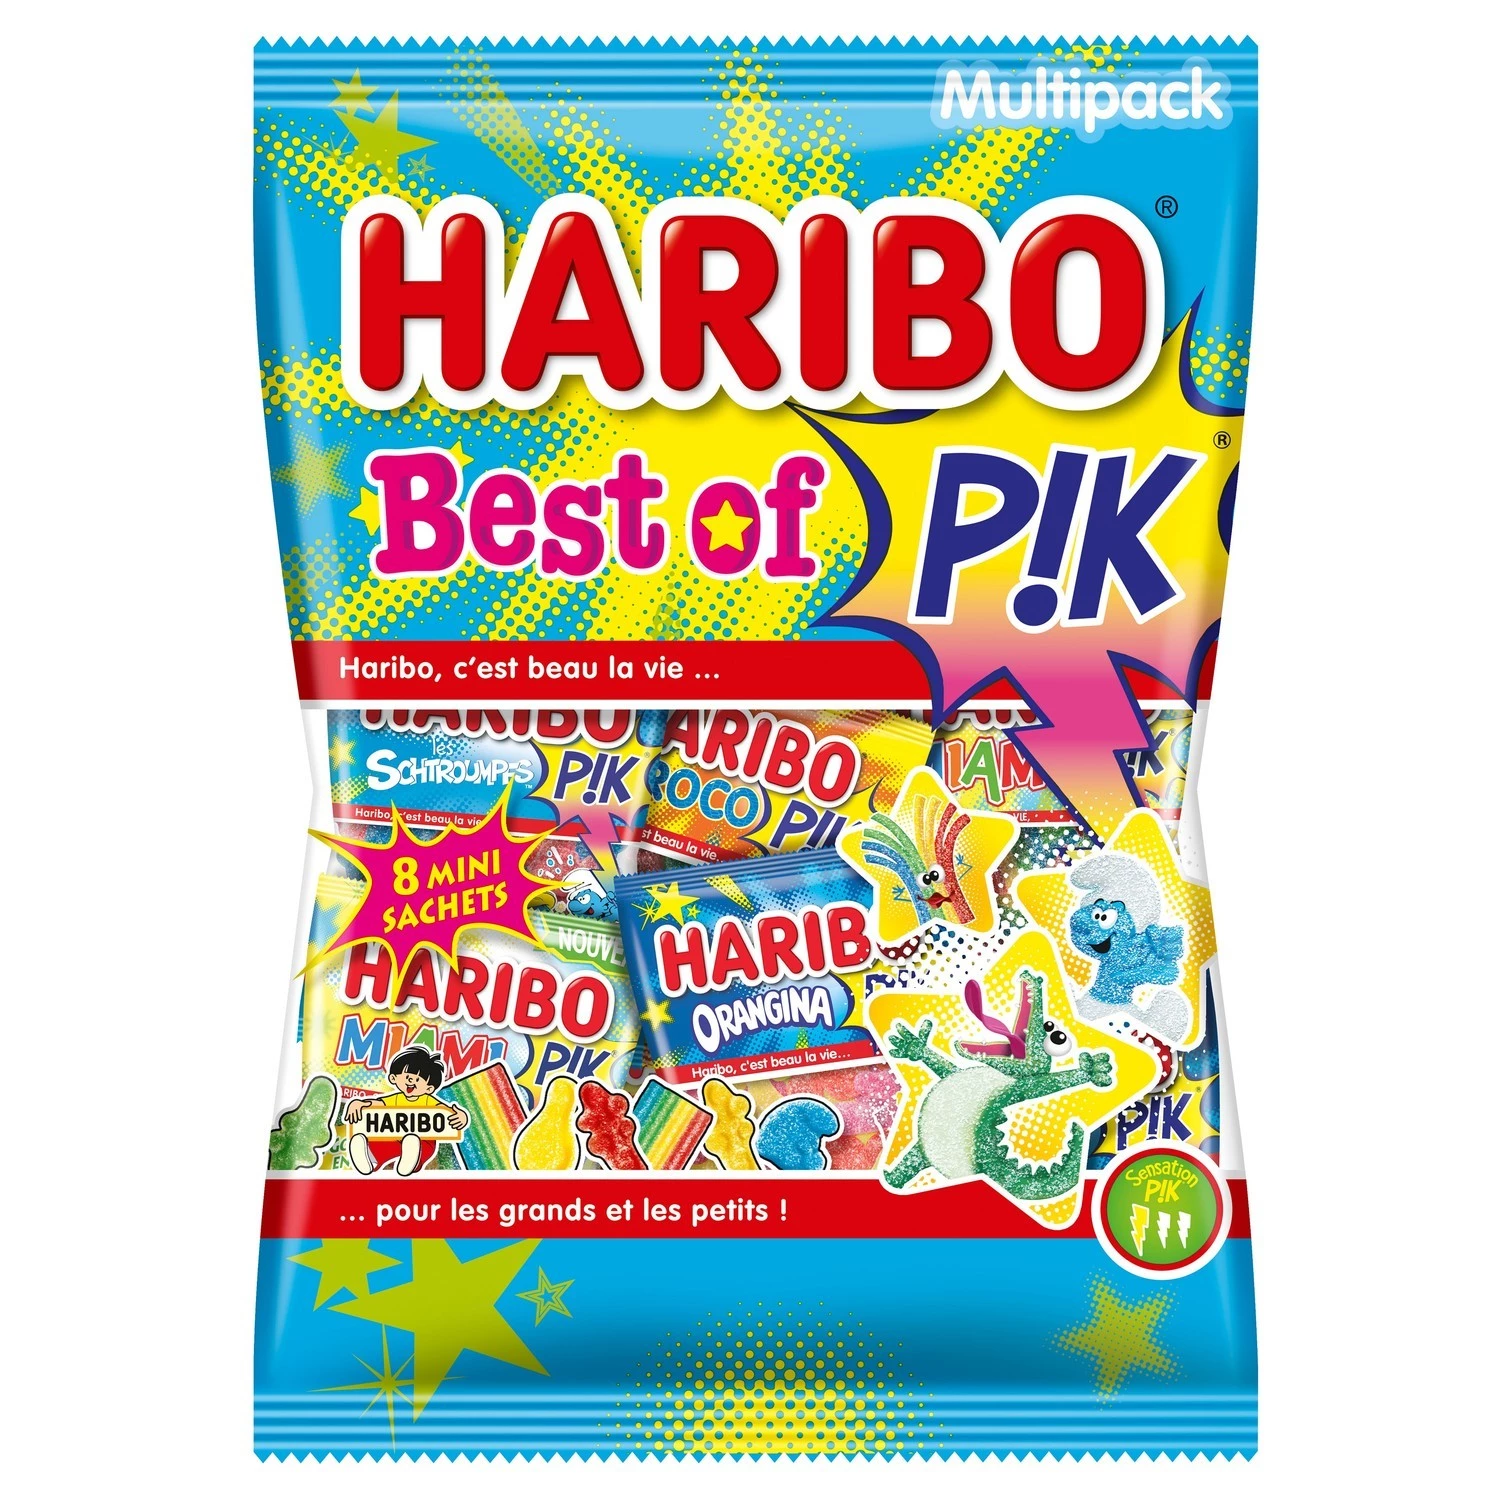 Bonbons Play & Pik أفضل ما في؛ 360 جرام - HARIBO